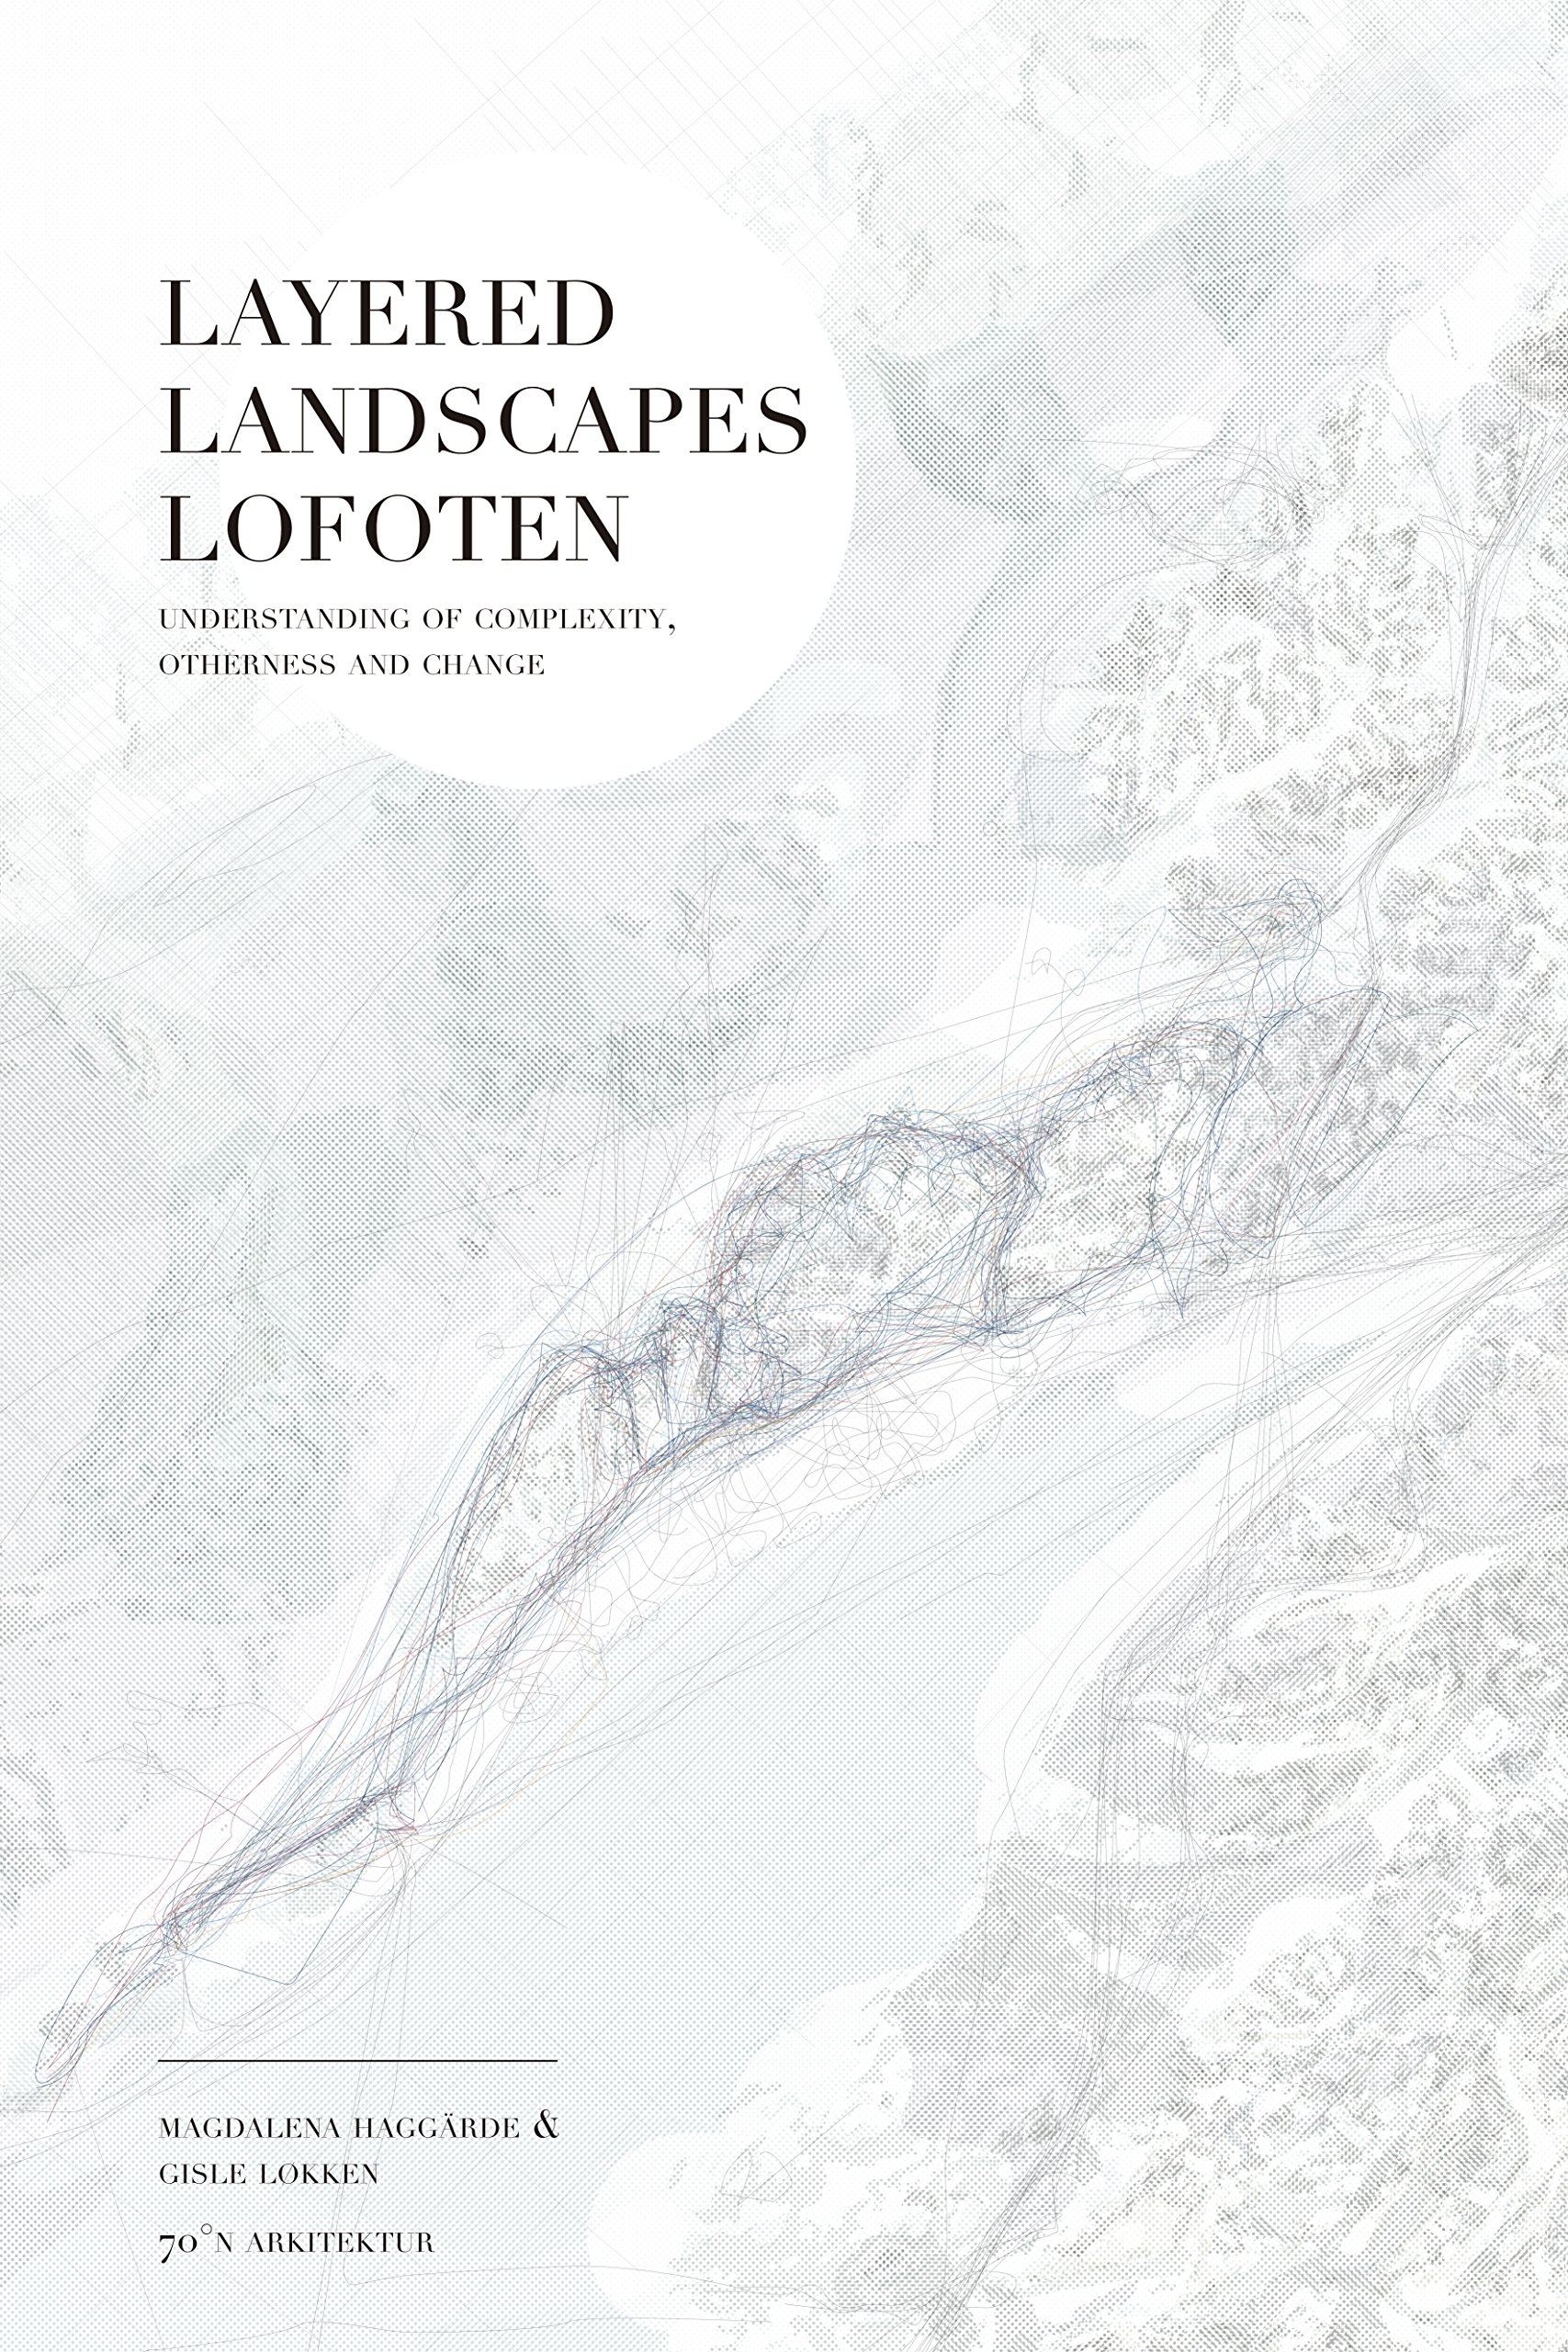 Layered Landscapes Lofoten